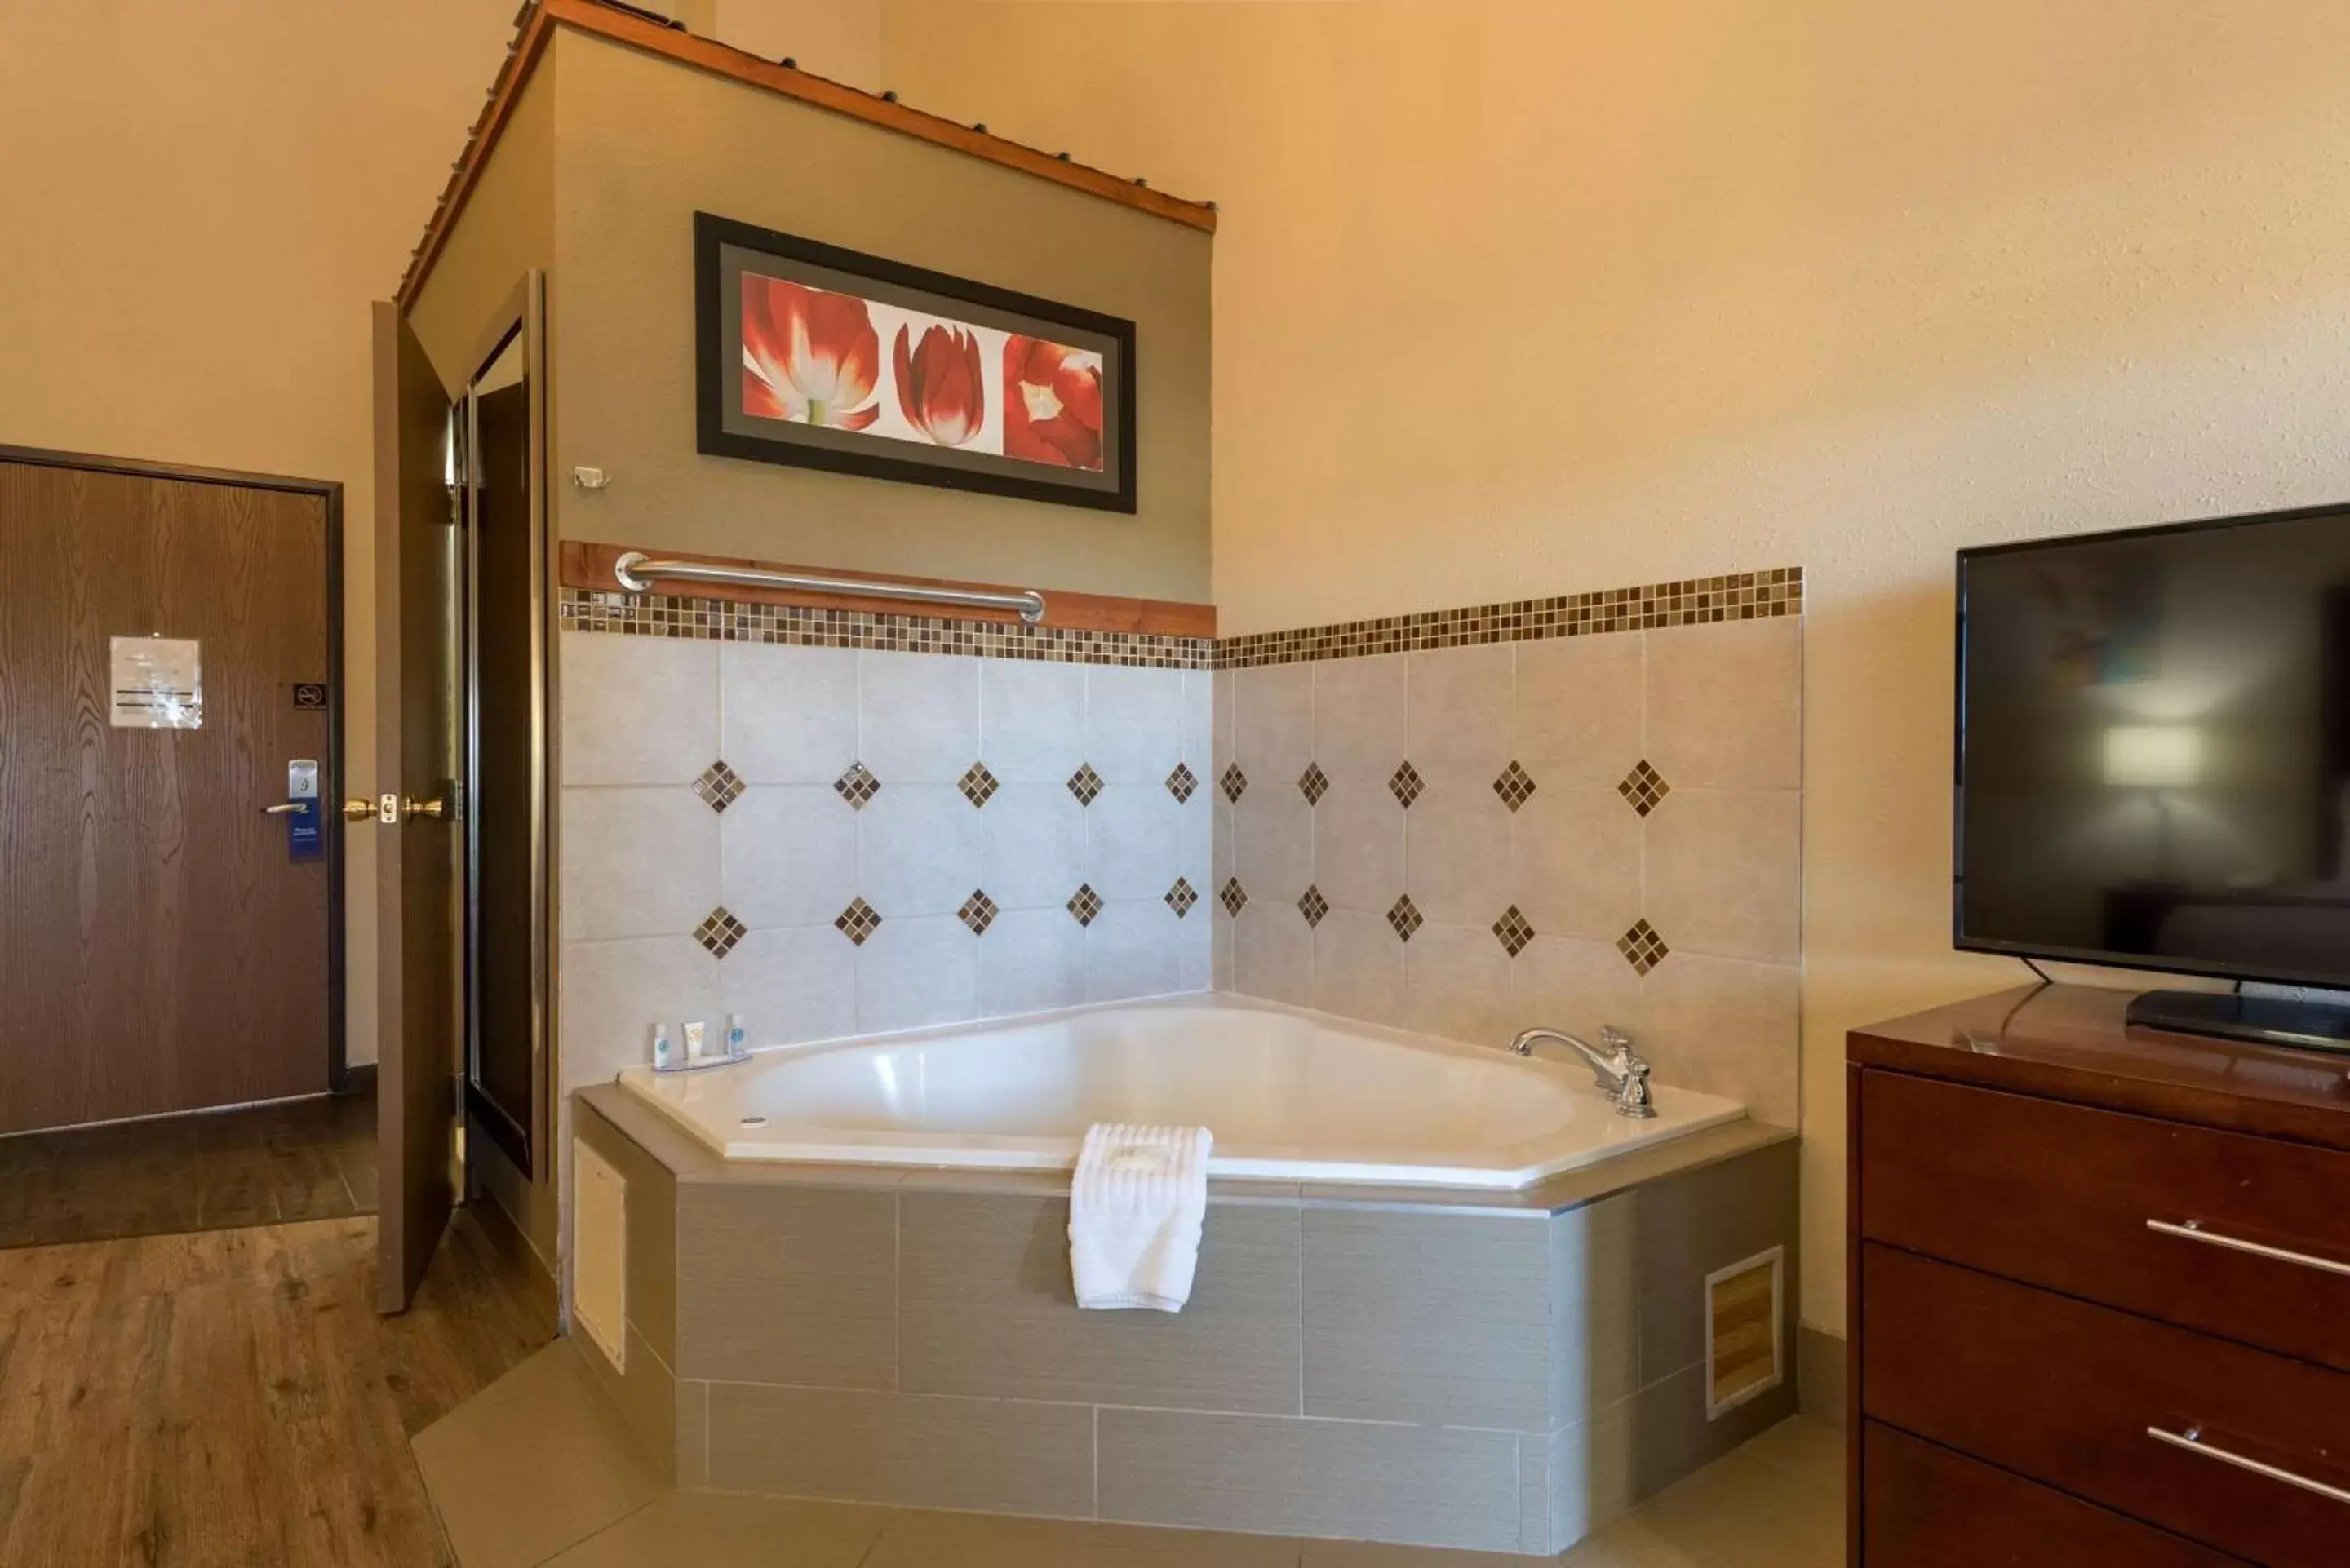 Bedroom in Comfort Inn & Suites Alamosa